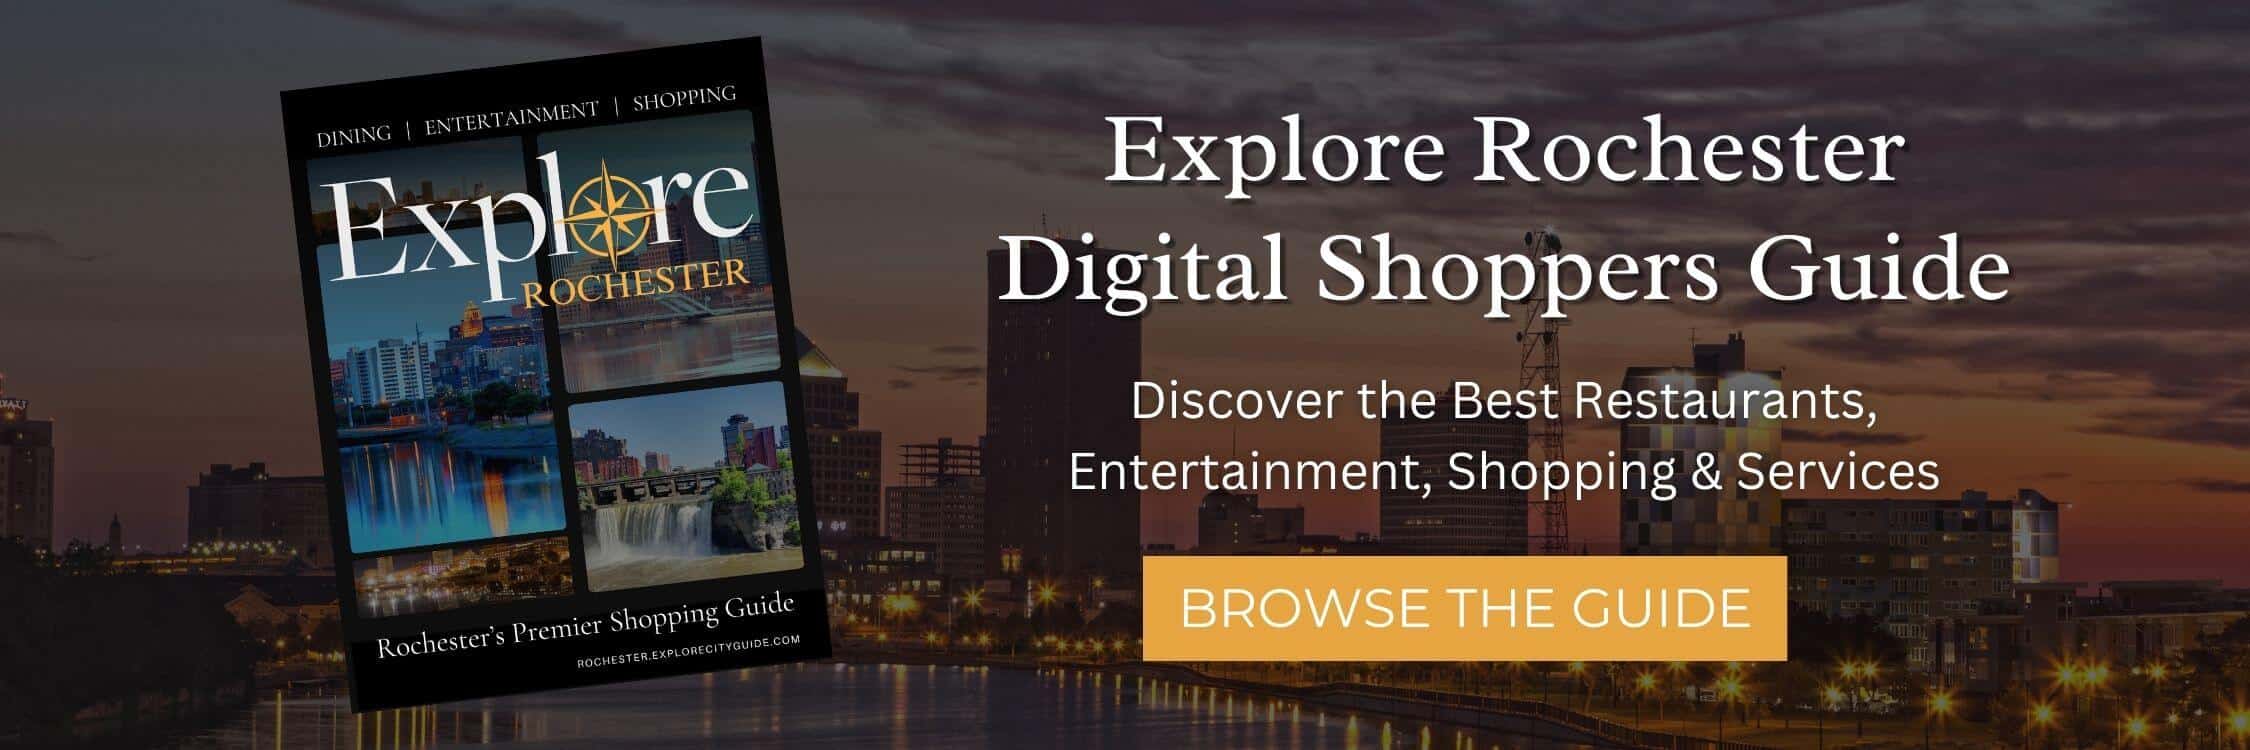 Explore Rochester Digital Shoppers Guide